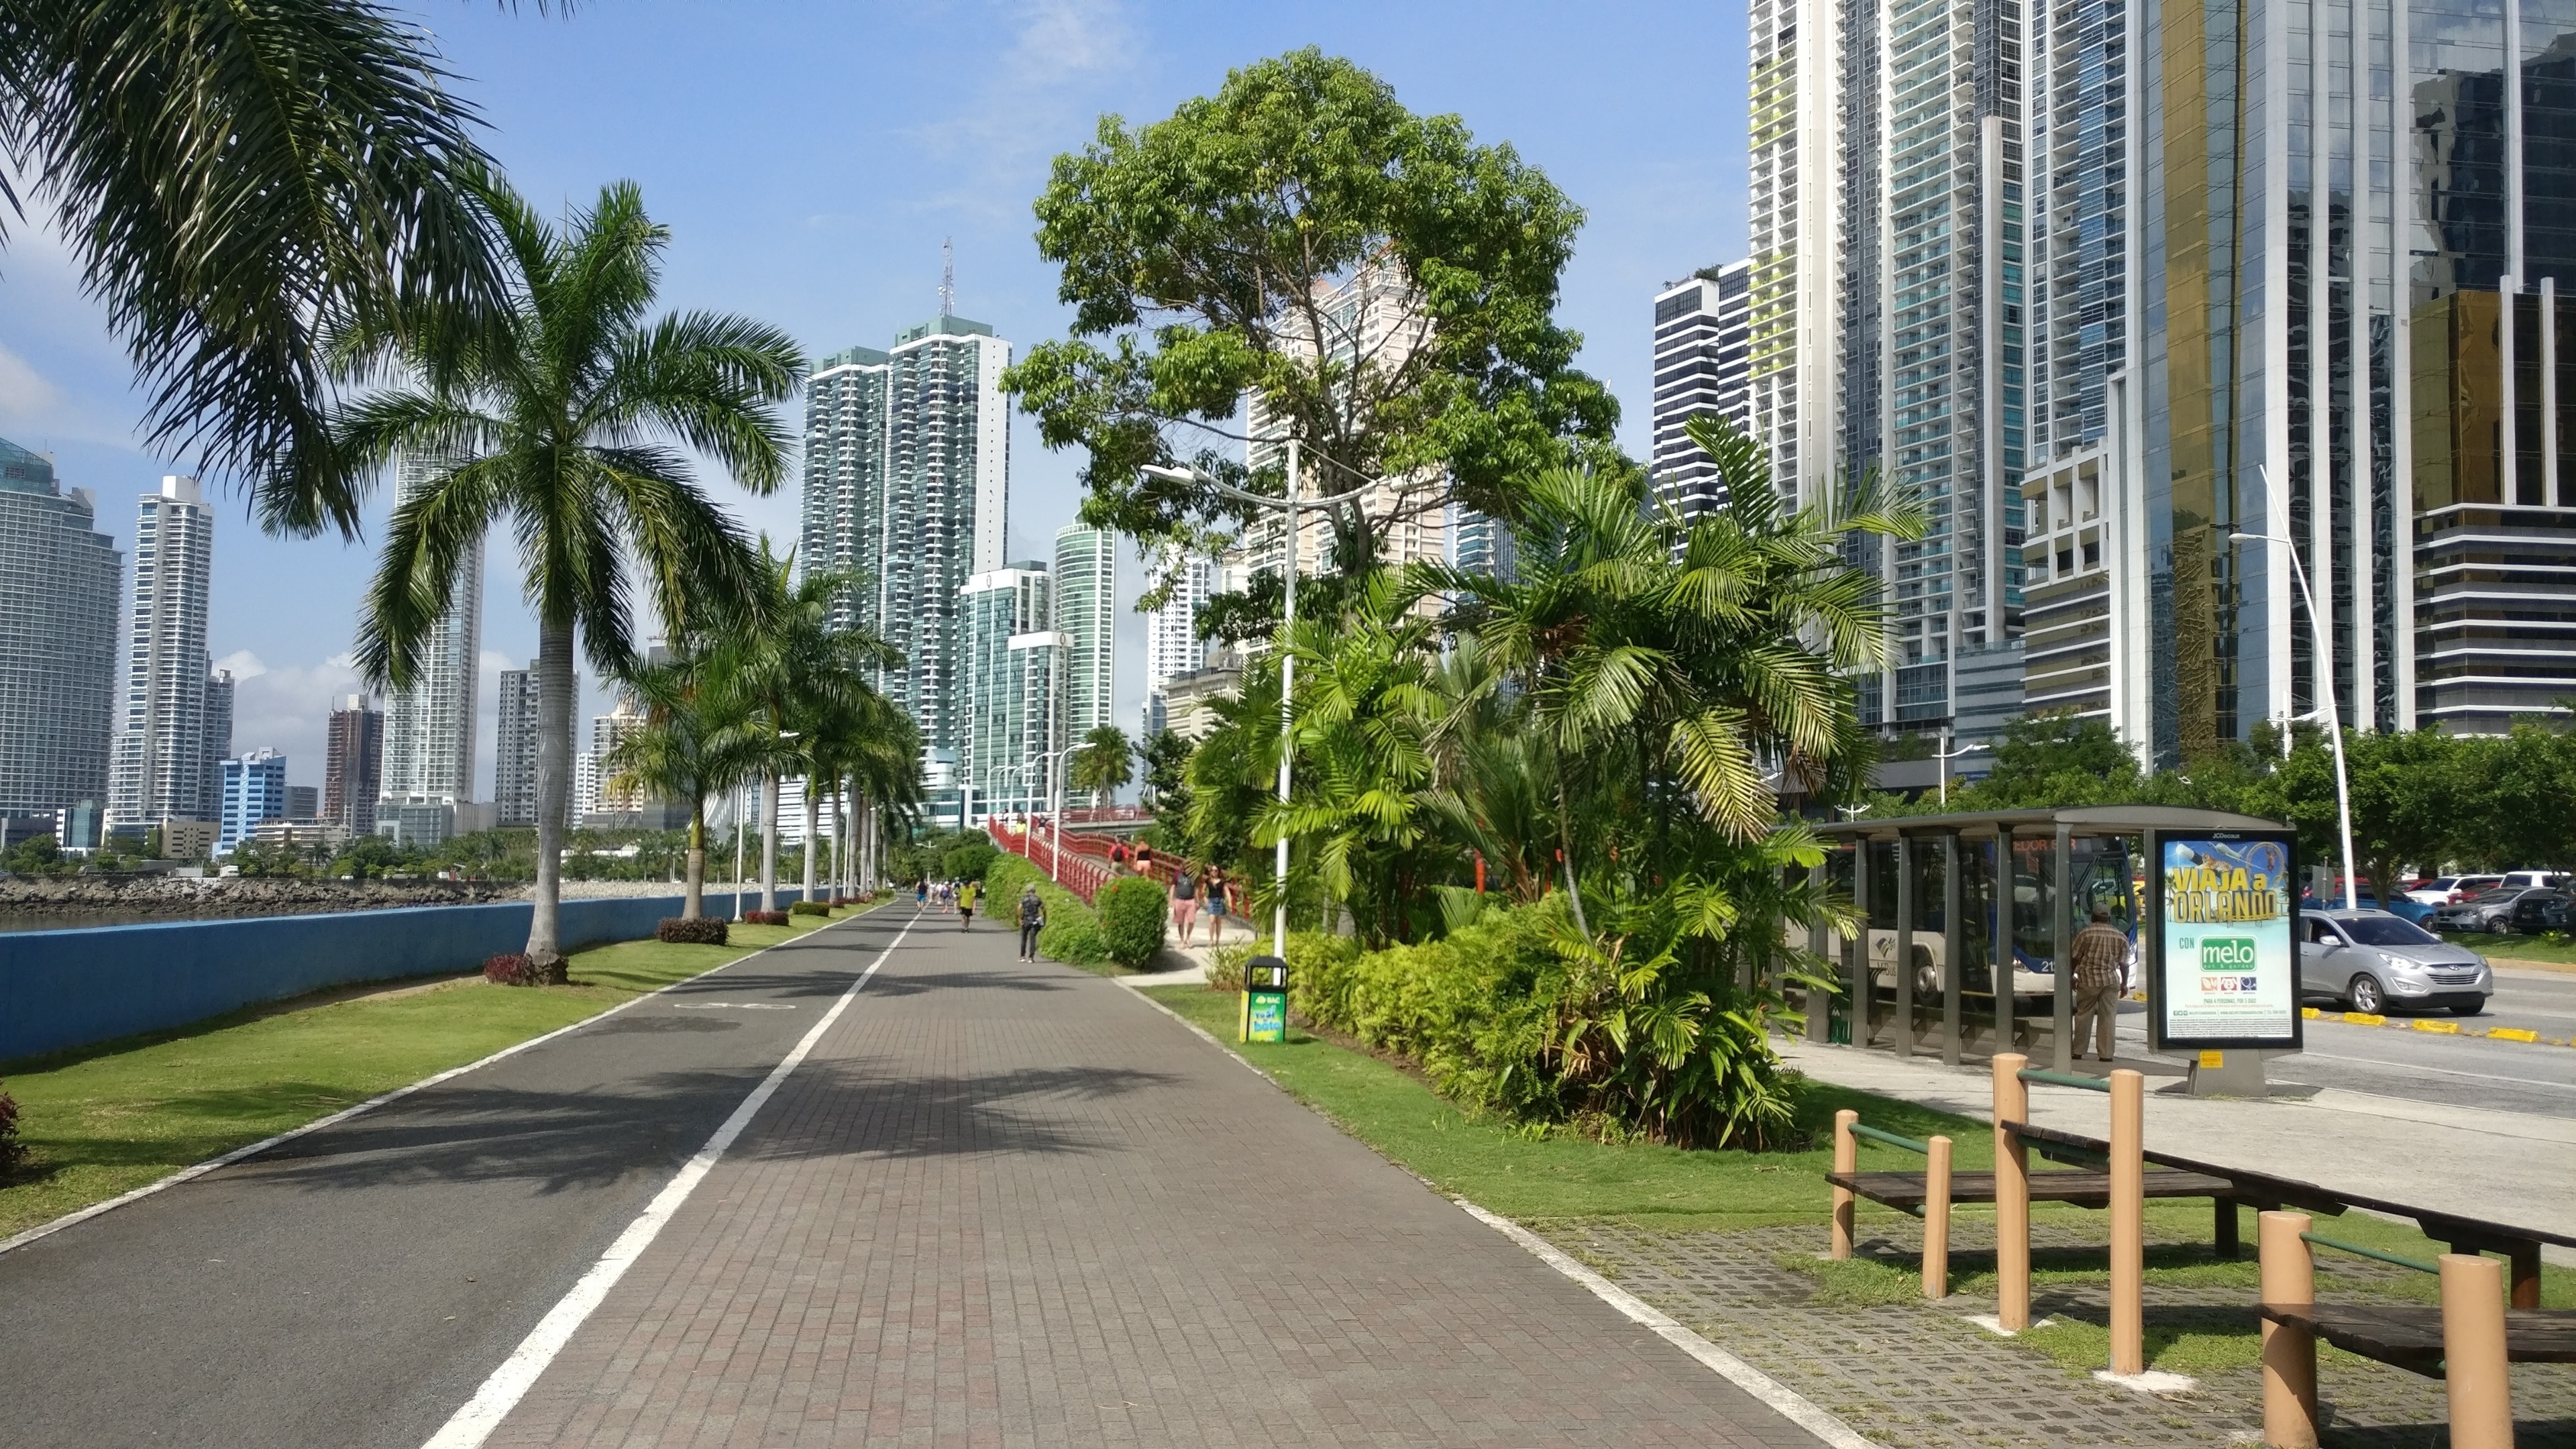 Panama City (Travels), Avenida Balboa Panama, Vacation rentals, House rentals, 3840x2160 4K Desktop